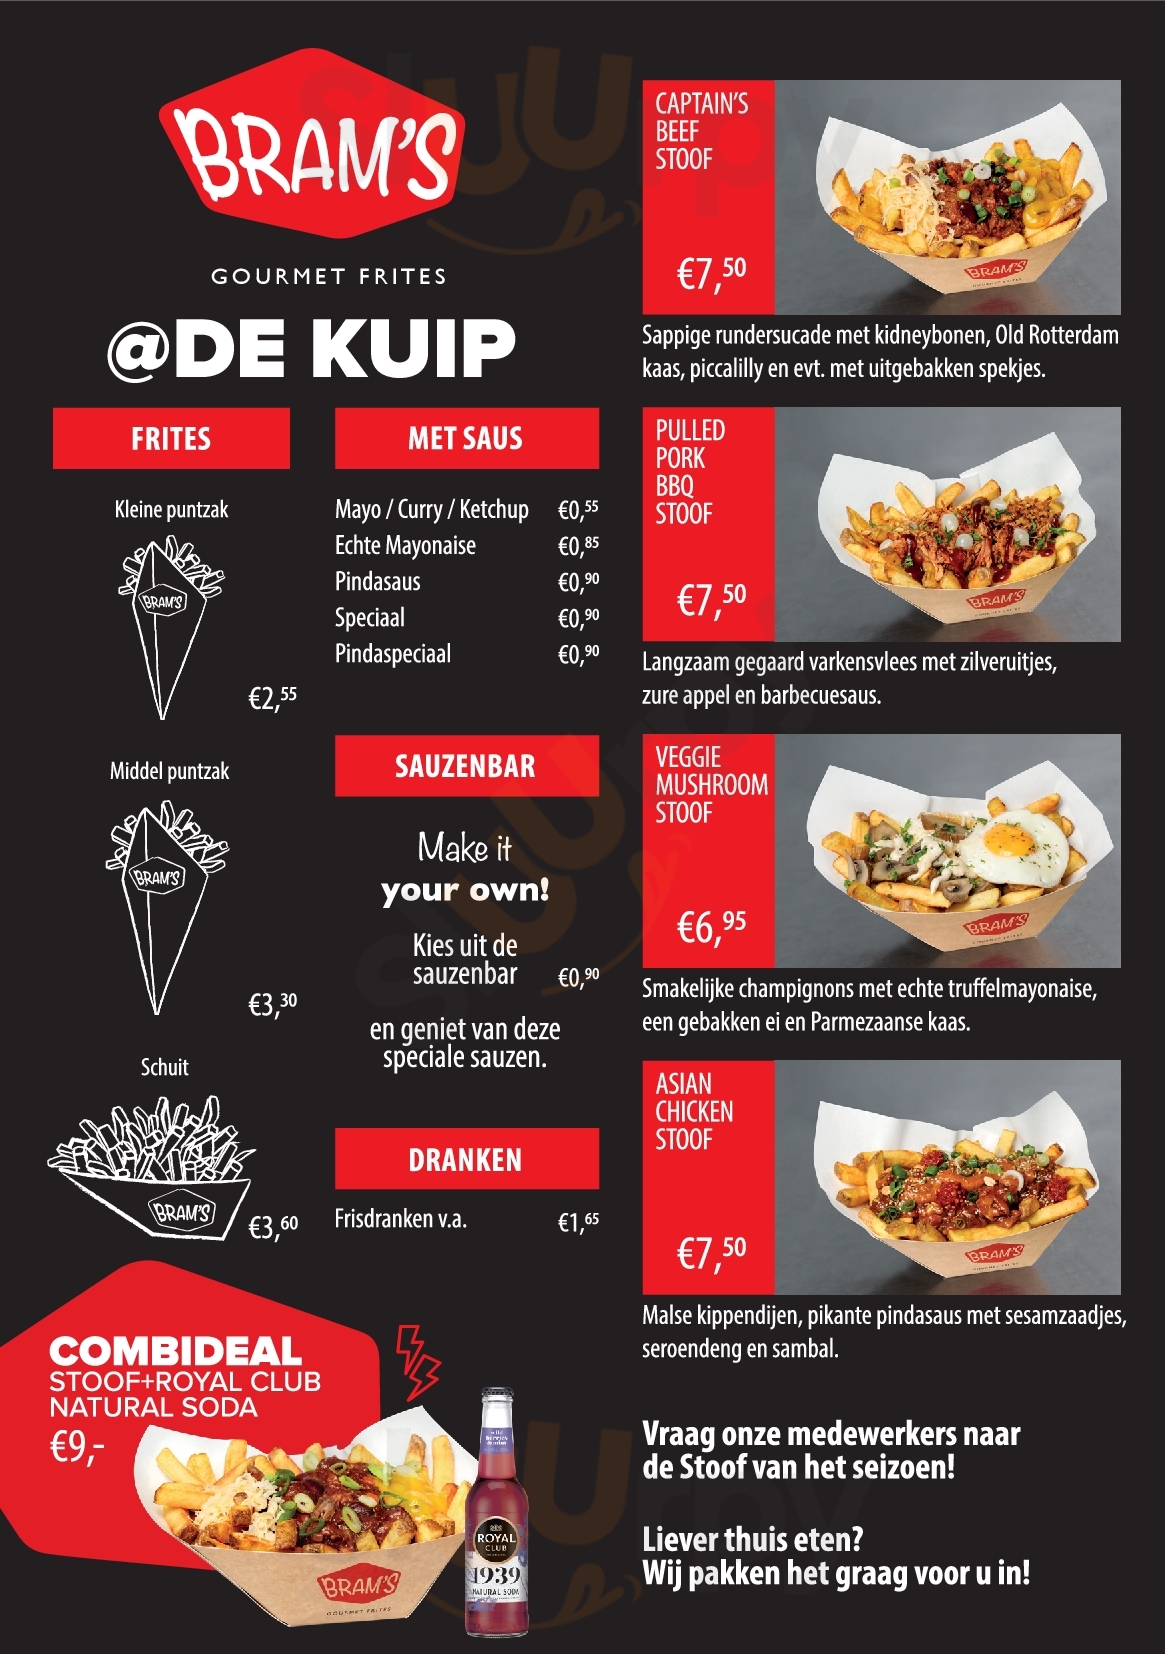 Bram's Gourmet Frites @ De Kuip Rotterdam Menu - 1